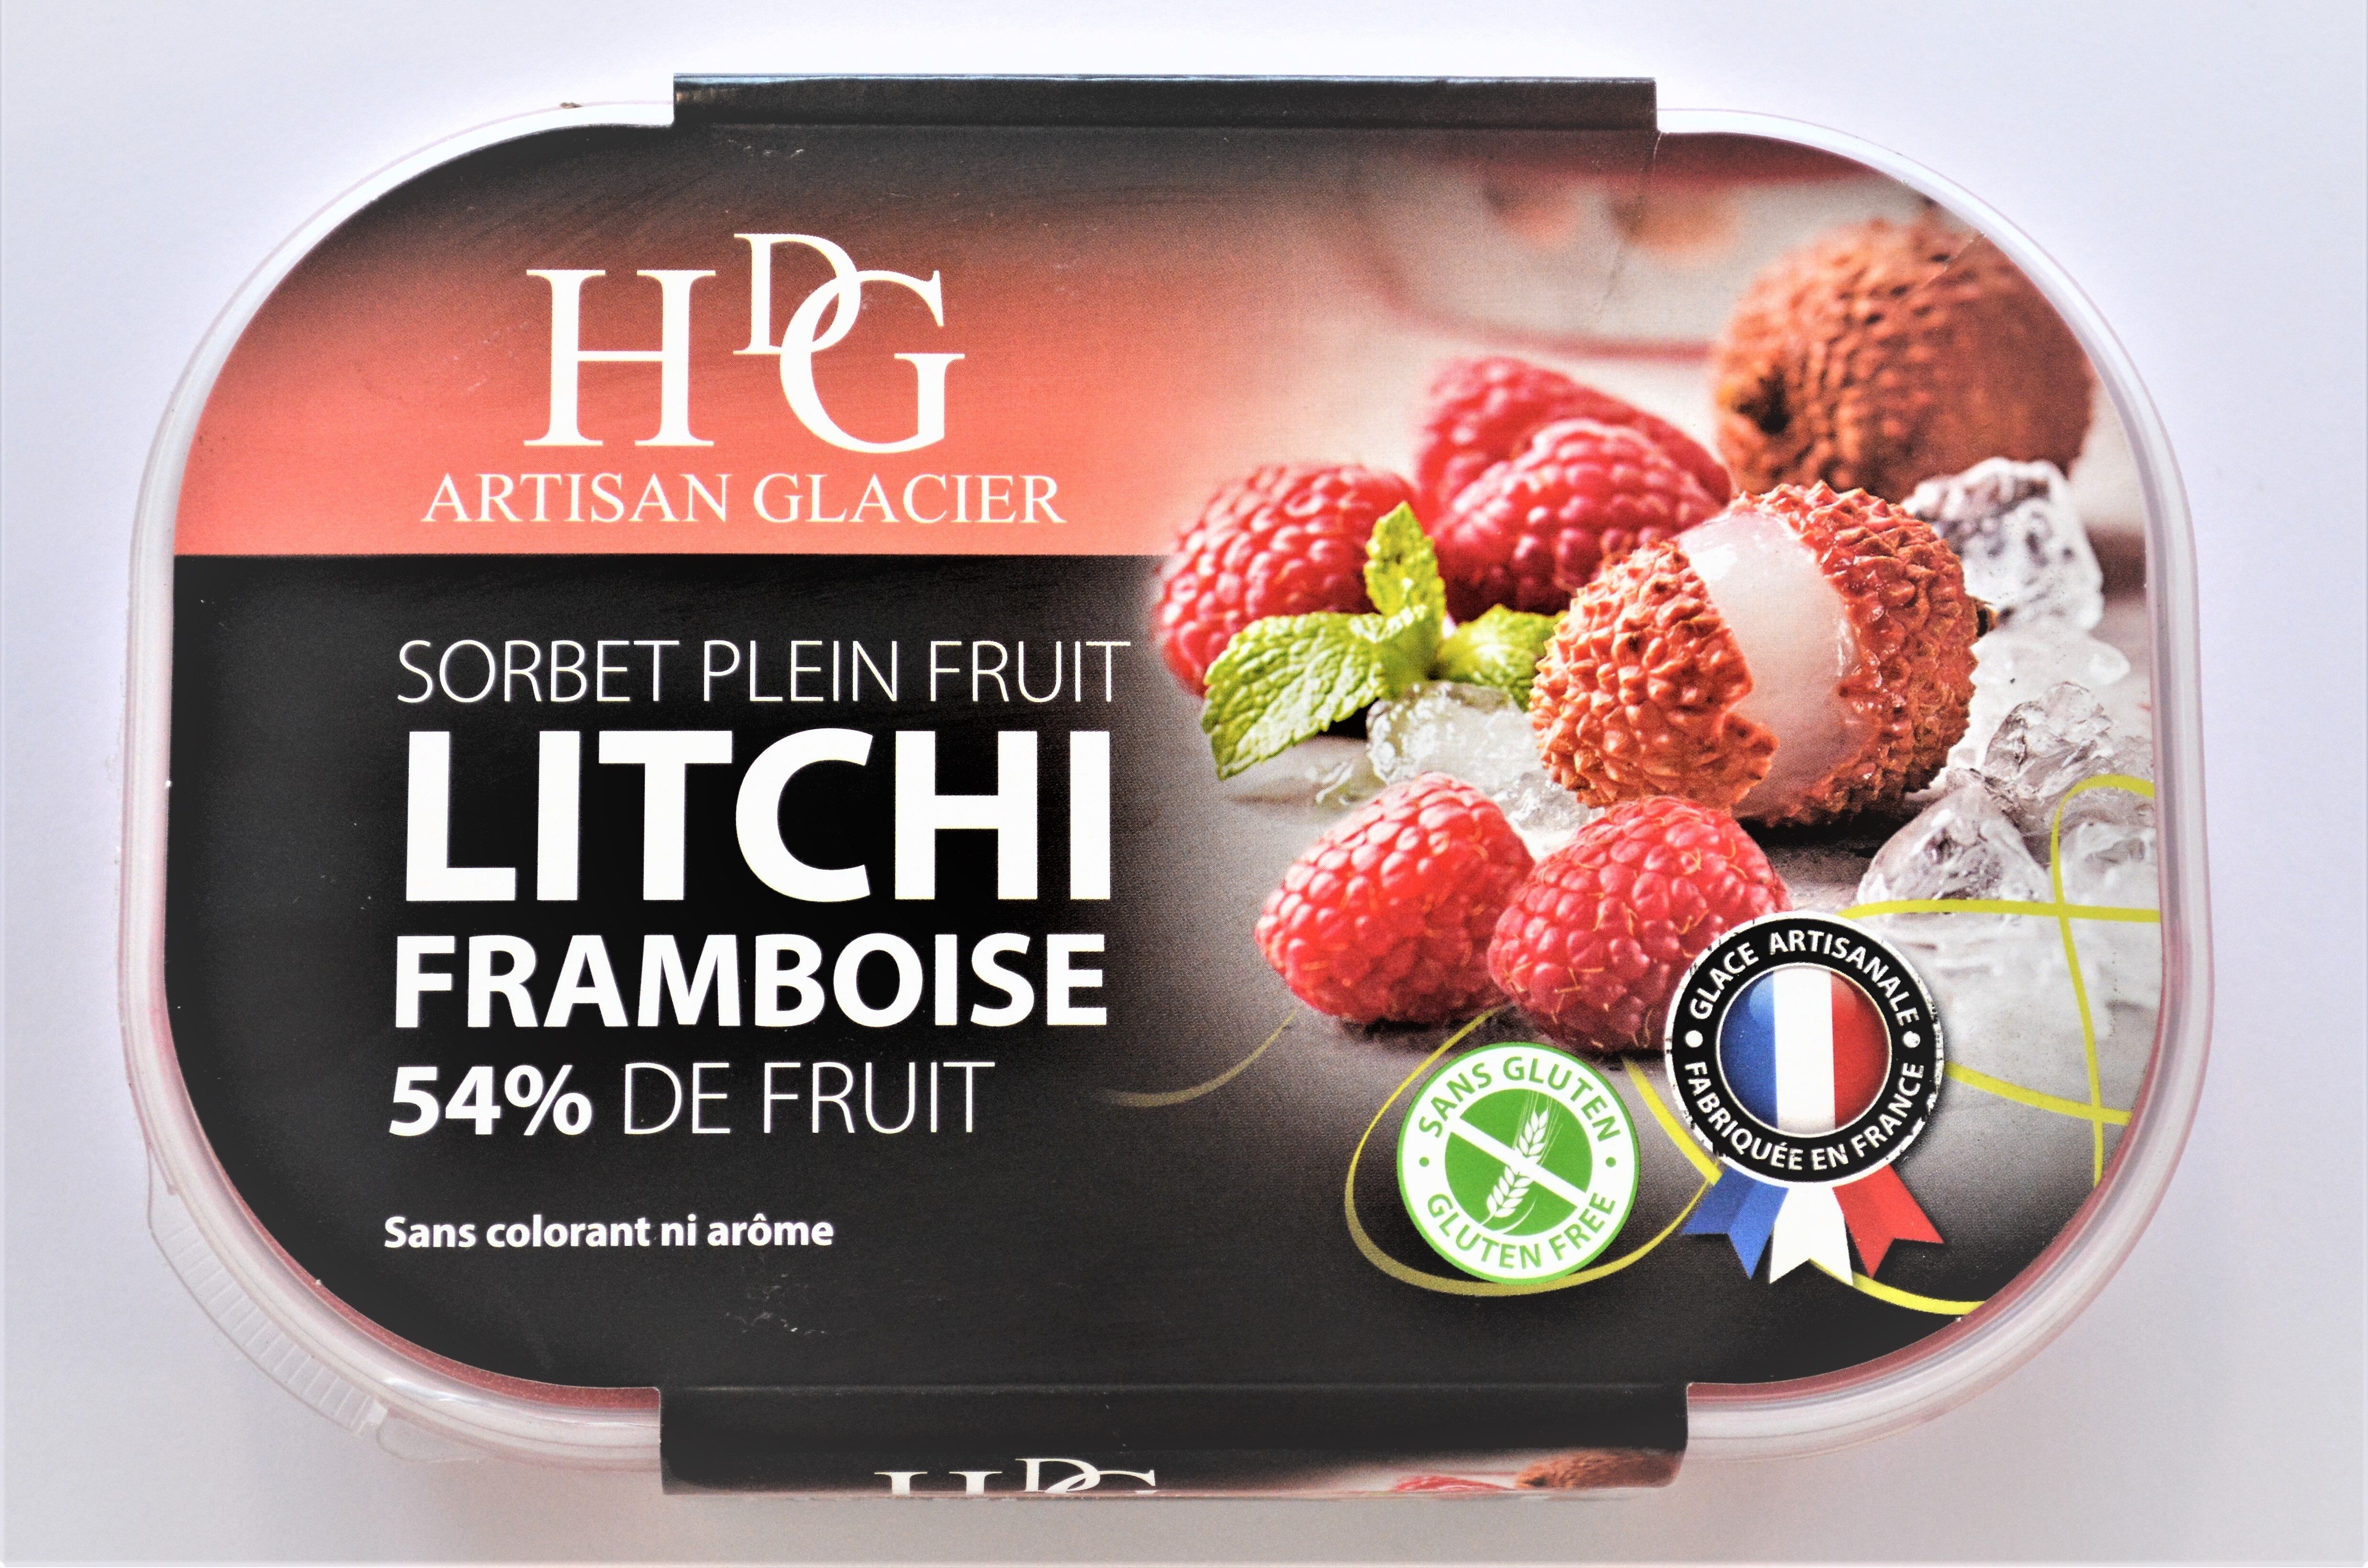 Sorbet plein fruit litchi framboise - Product - fr